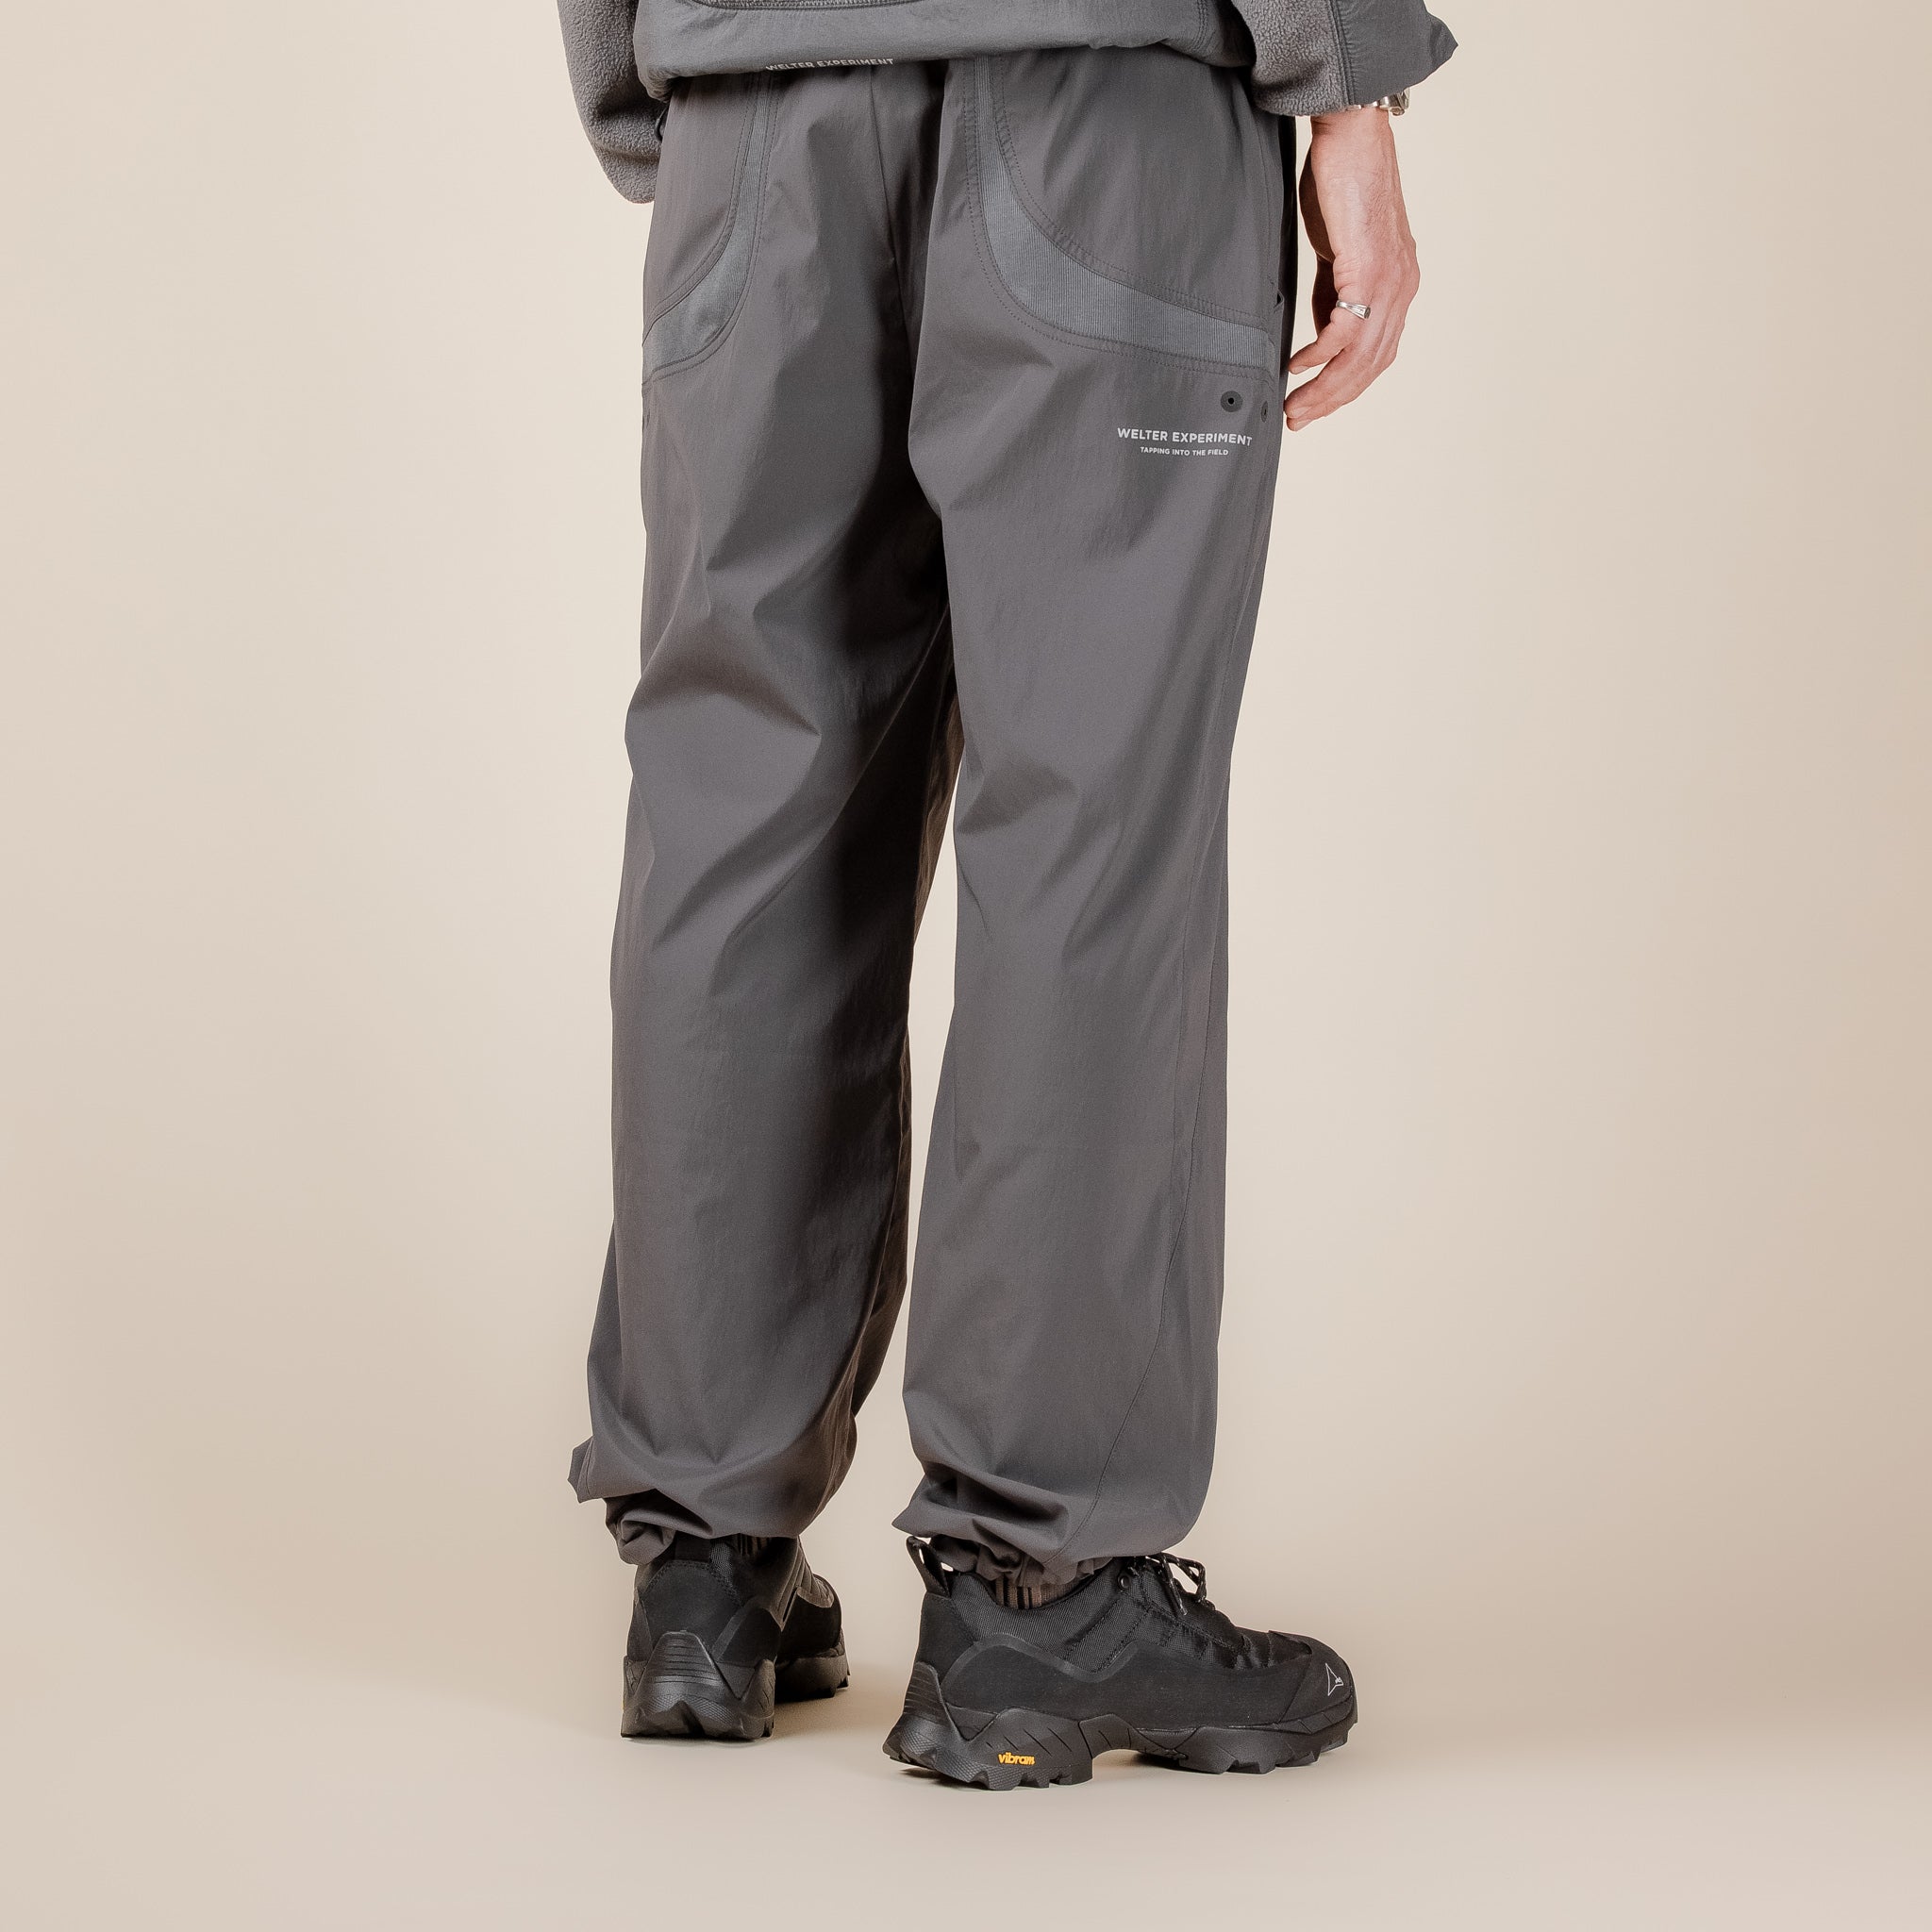 Welter Experiment - WP023 Basic Slit Pants - Charcoal Grey